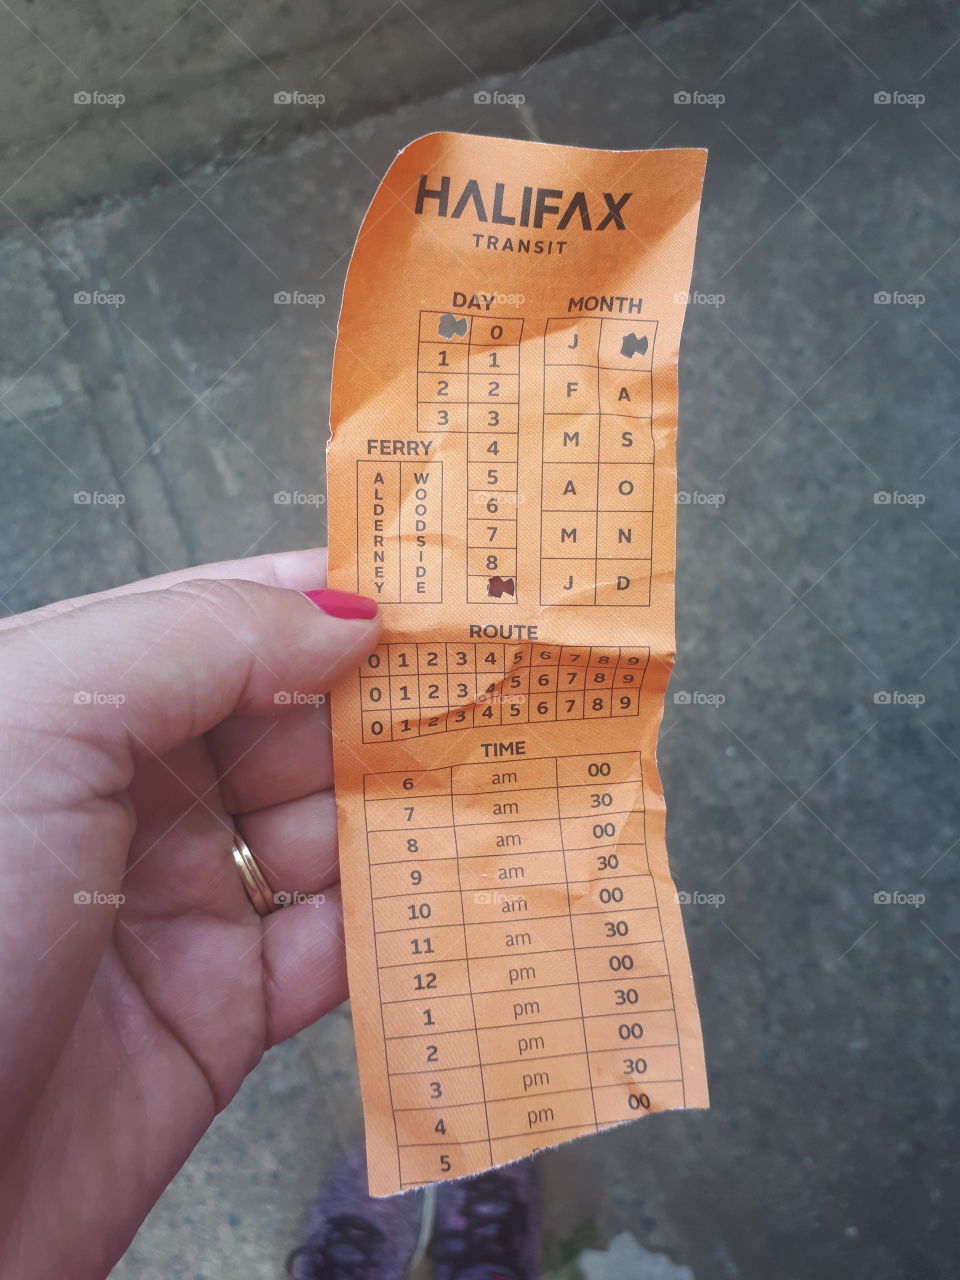 Halifax city bus orange transfer ticket